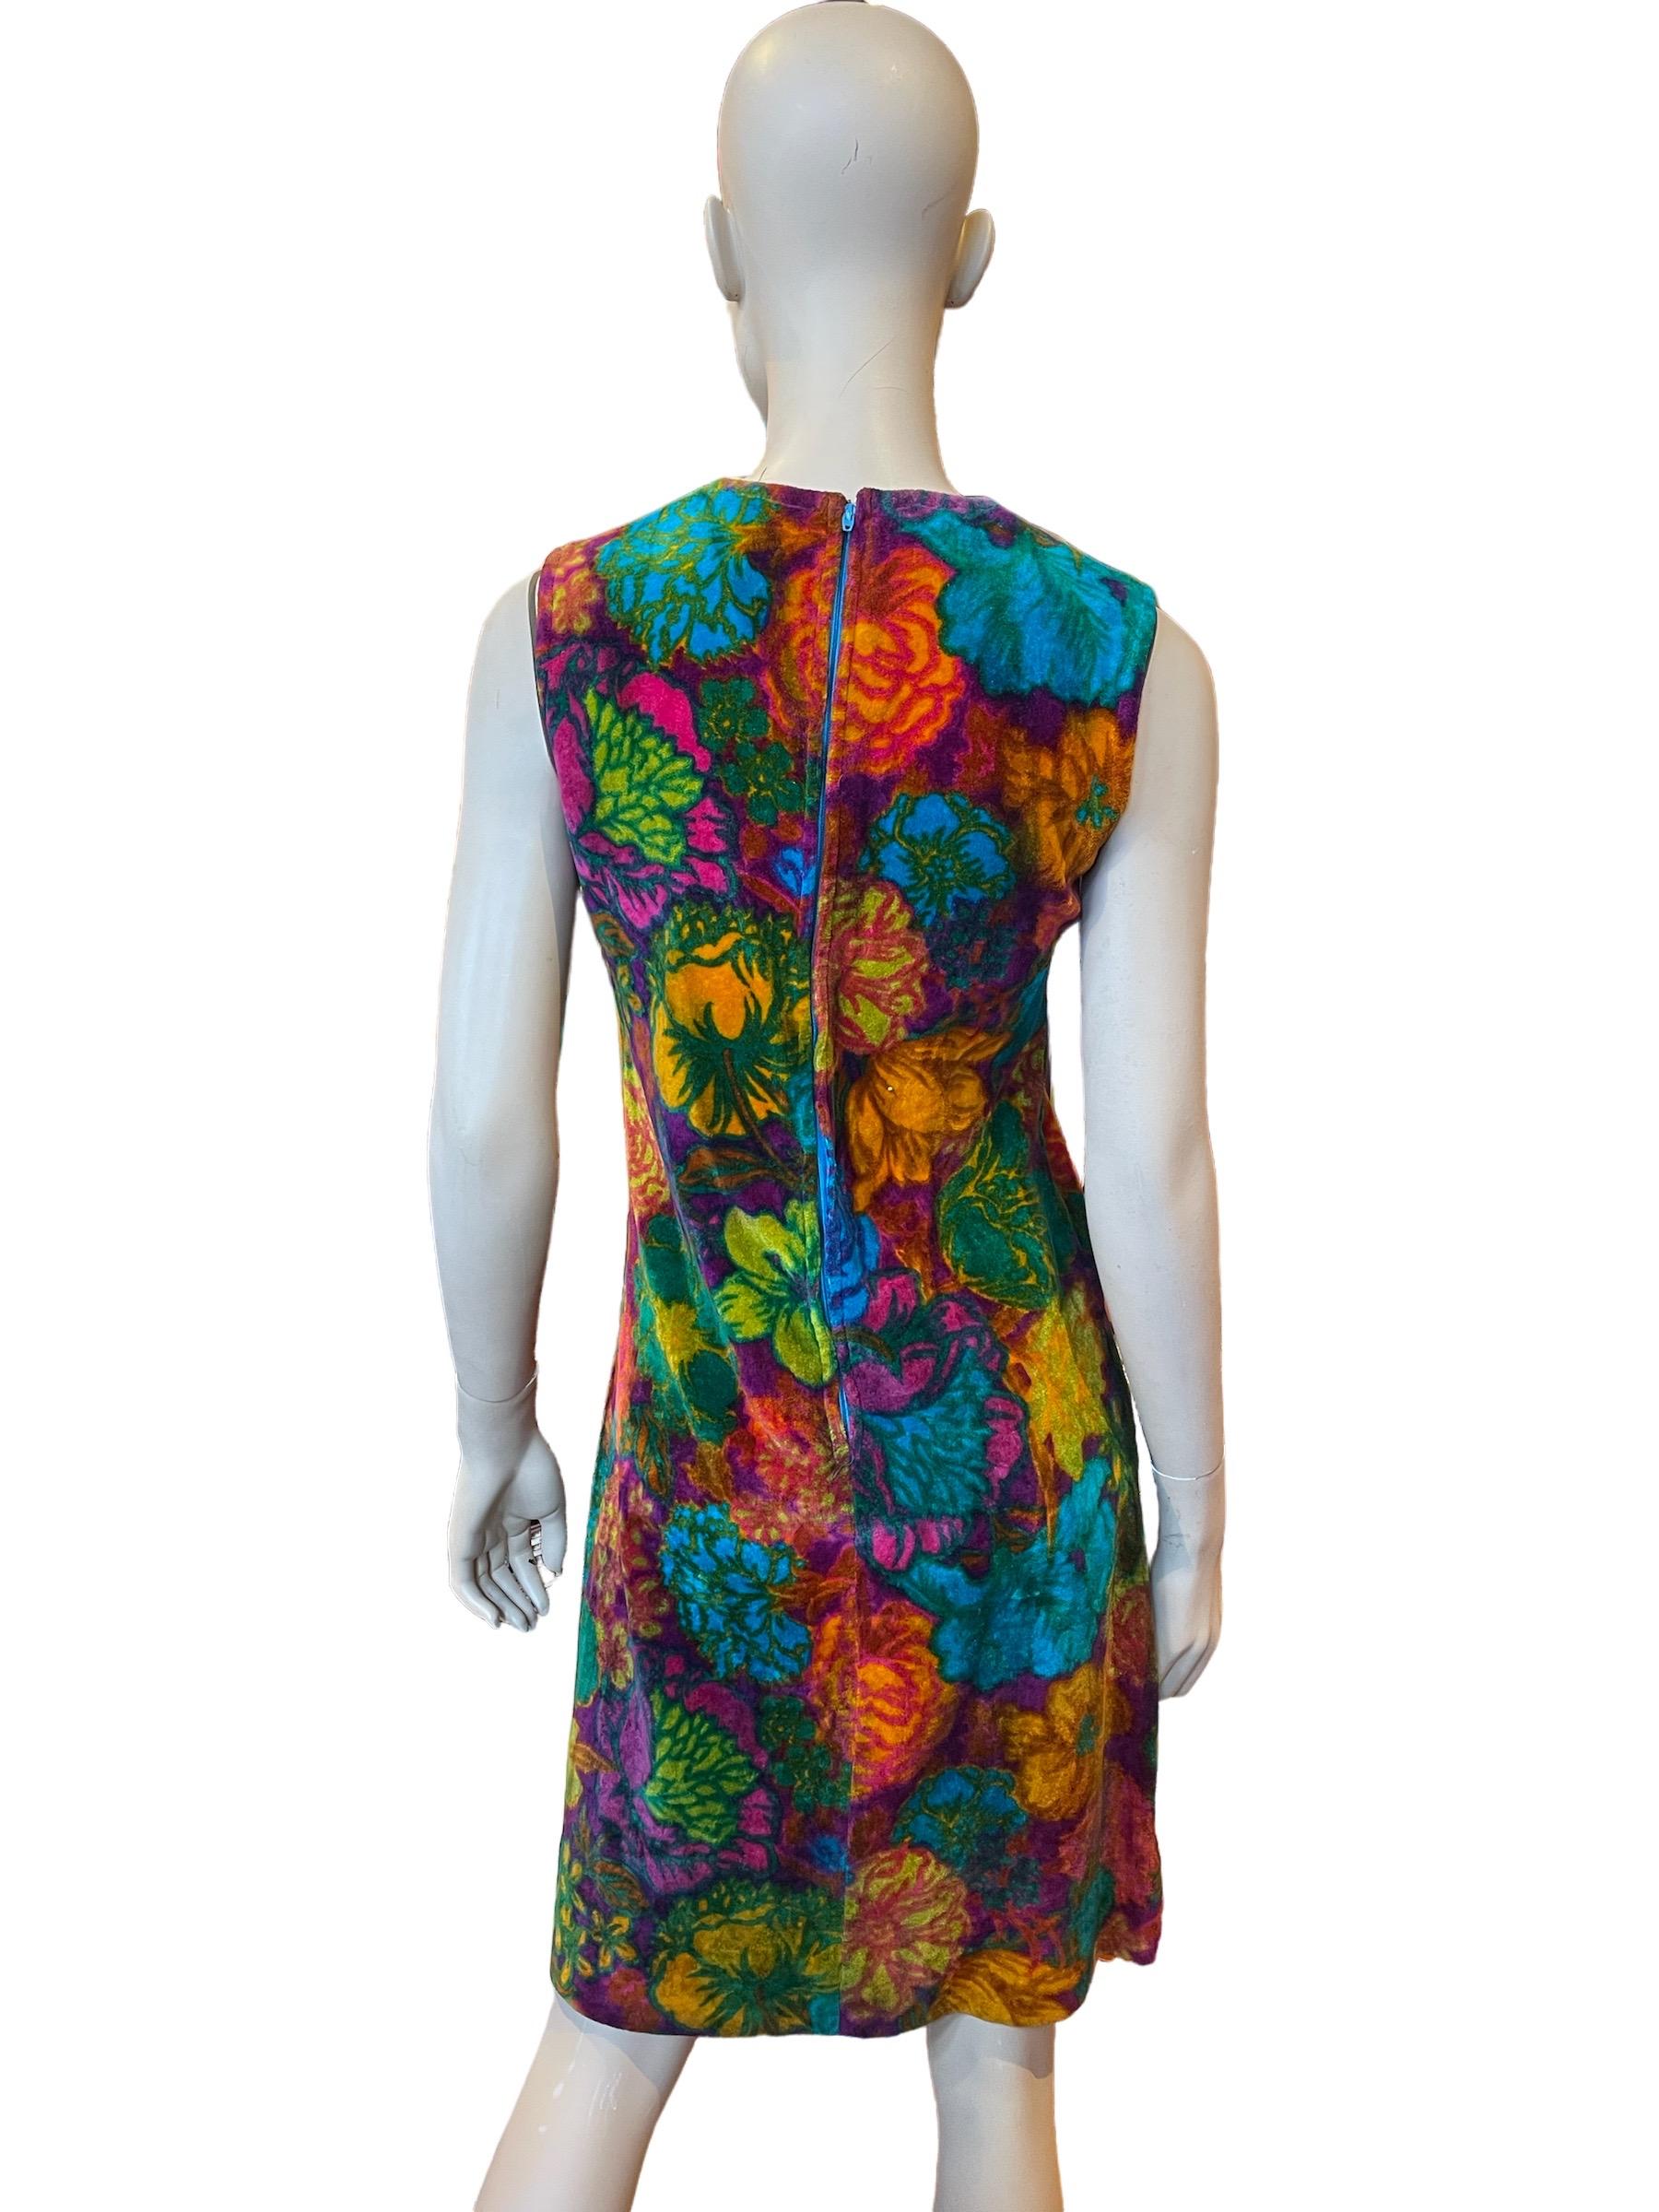 1960s Flower Power Sleeveless A-Line Dress

A beautiful 1960s brightly colored velvet, sleeveless, a-line dress.